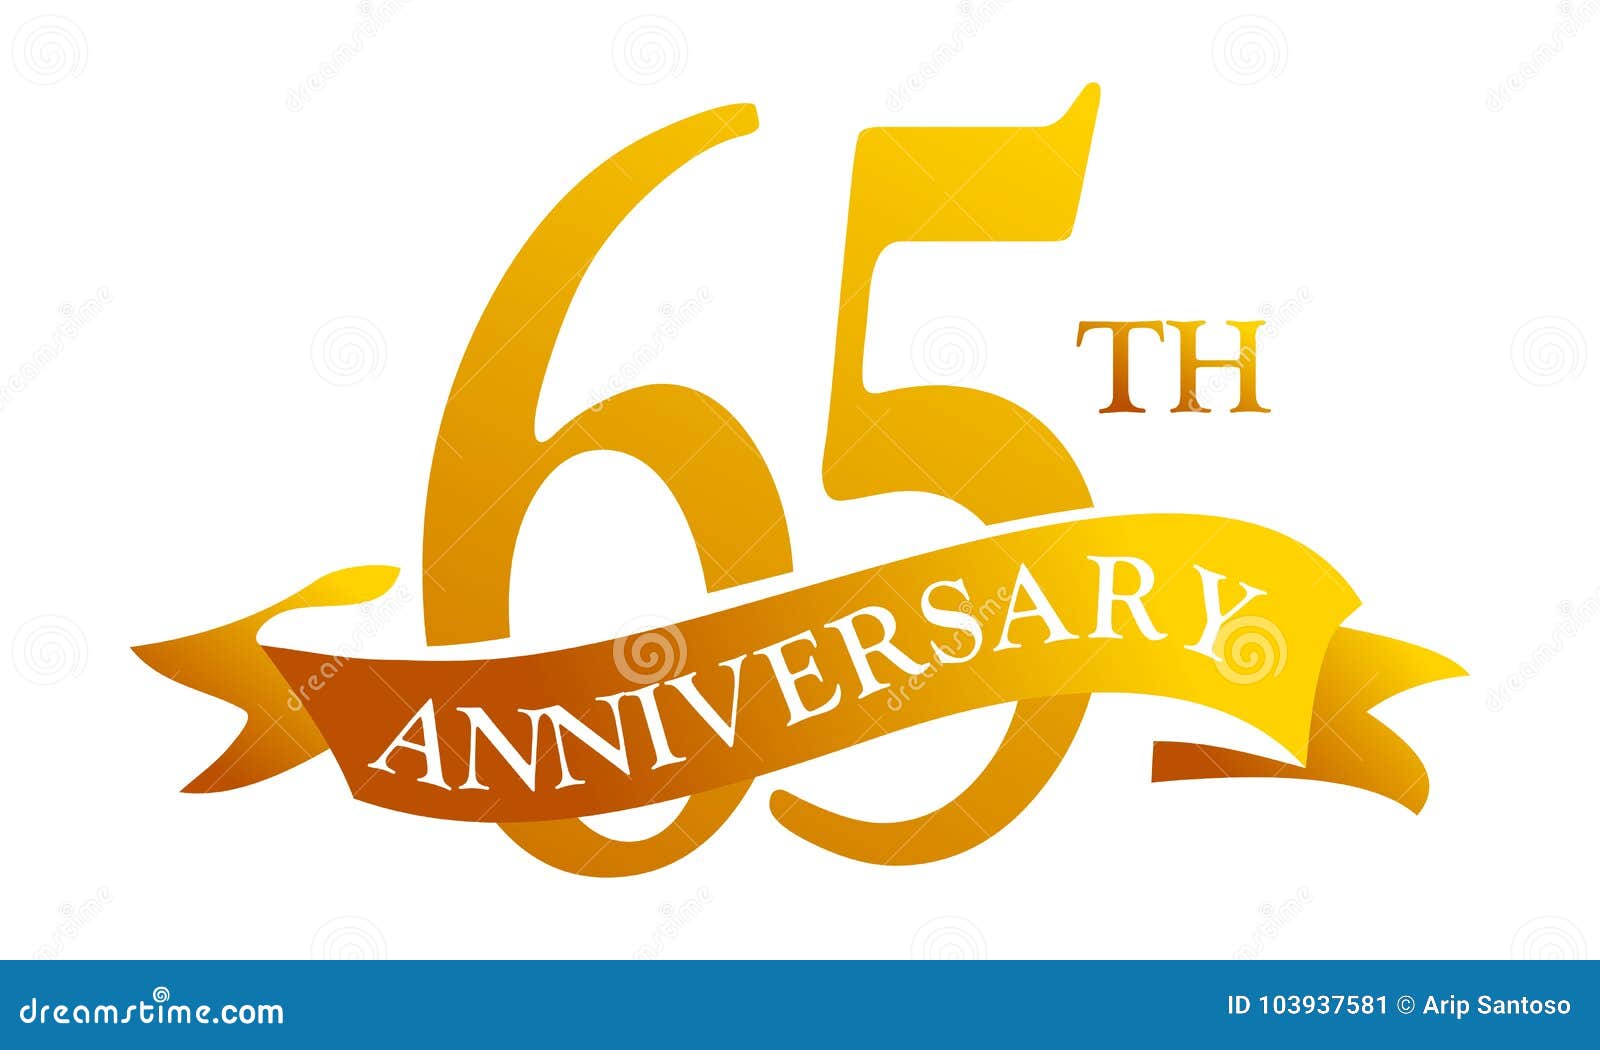 56 Year Ribbon Anniversary stock vector. Illustration of celebration ...